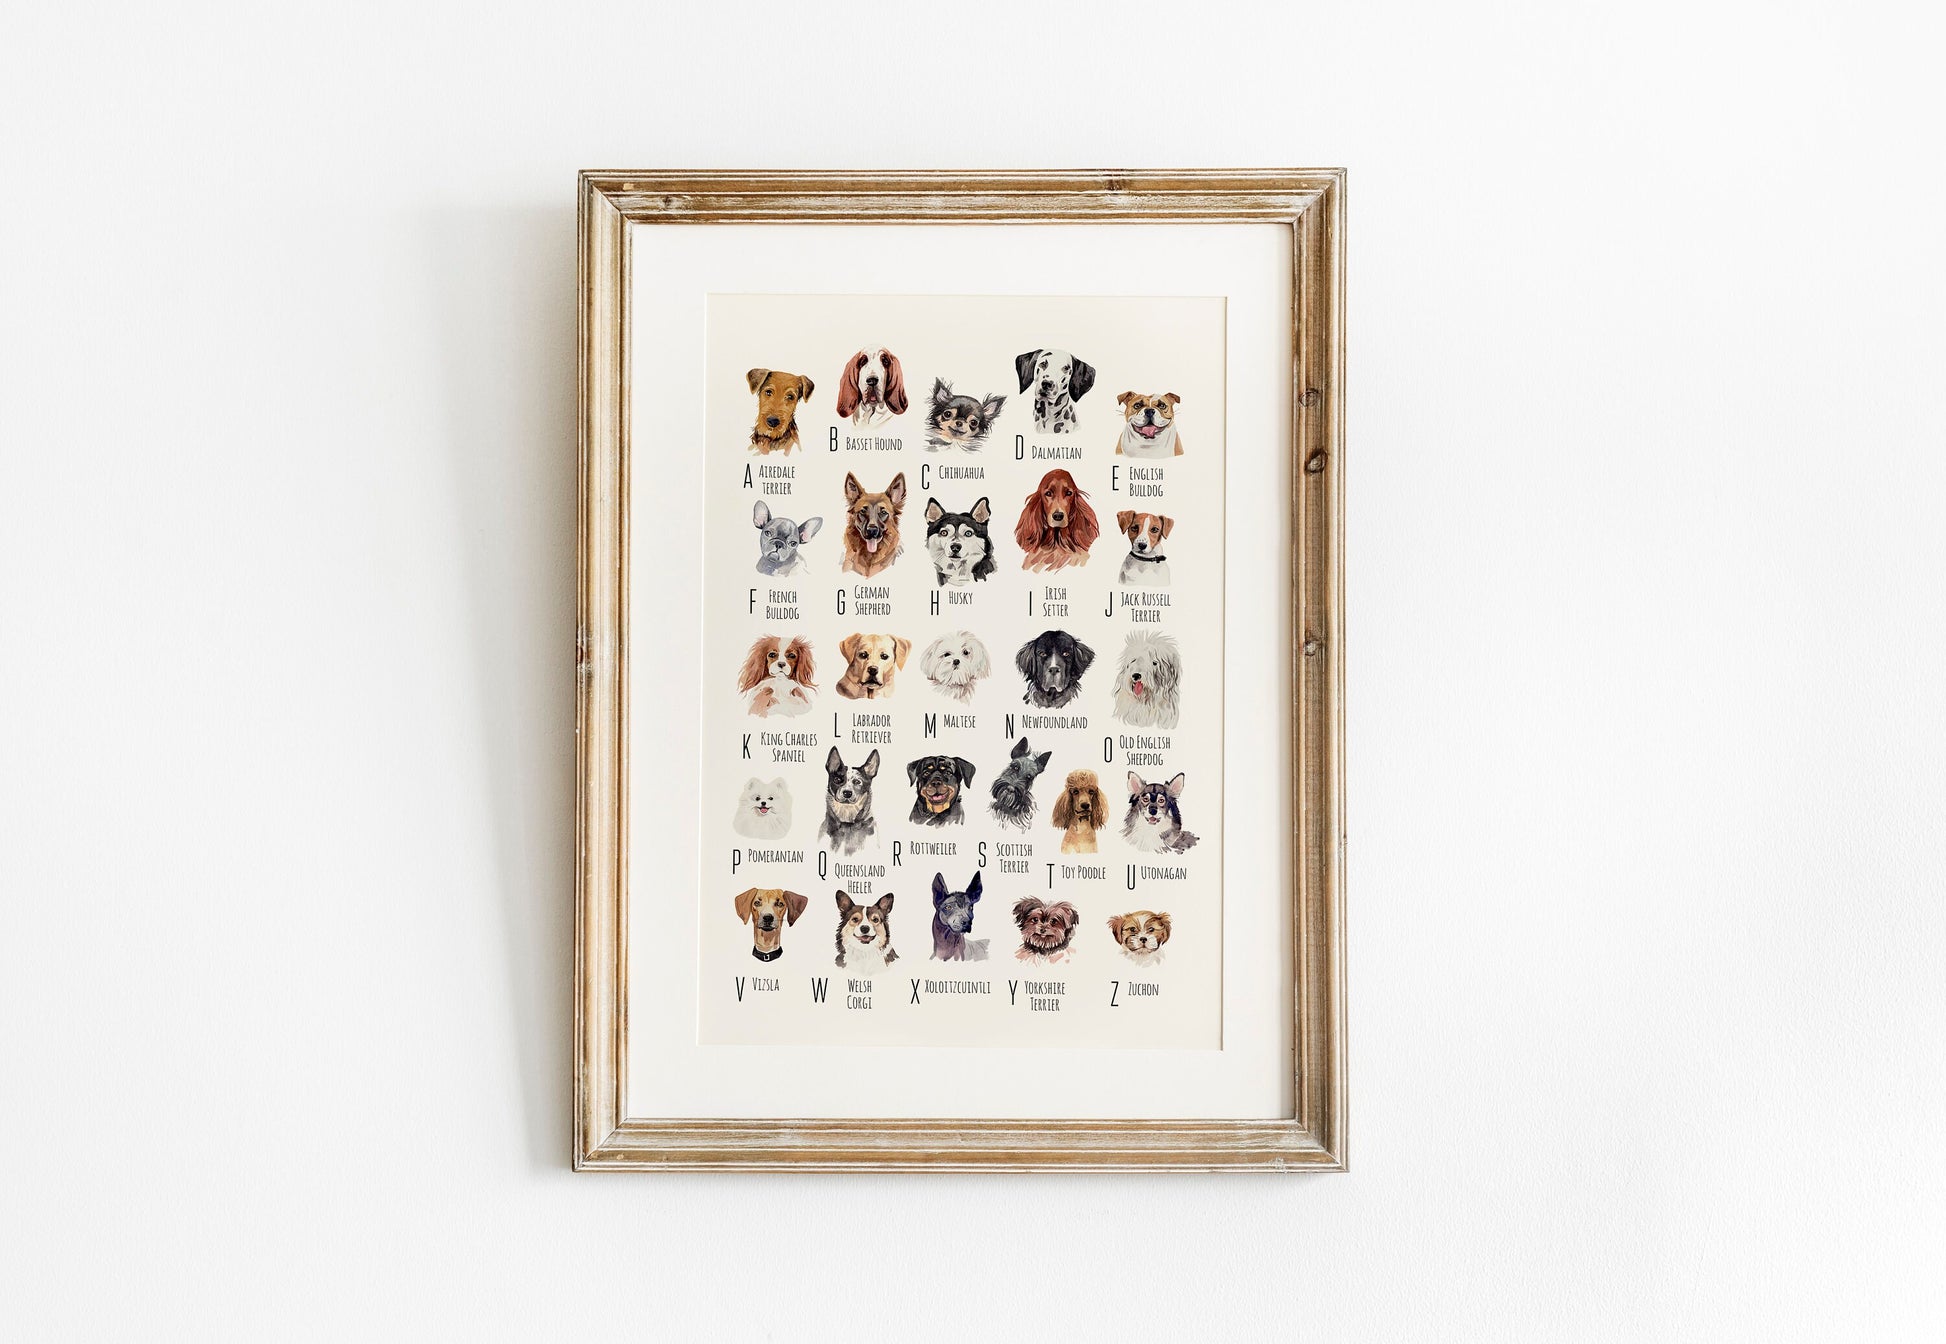 A-Z of Dogs Print, Dogs Alphabet, Dog Print Illustration, Pet Illustrations, Dog Lovers Gift, Dog Poster, Dog Prints, Dogs, Dog Breeds